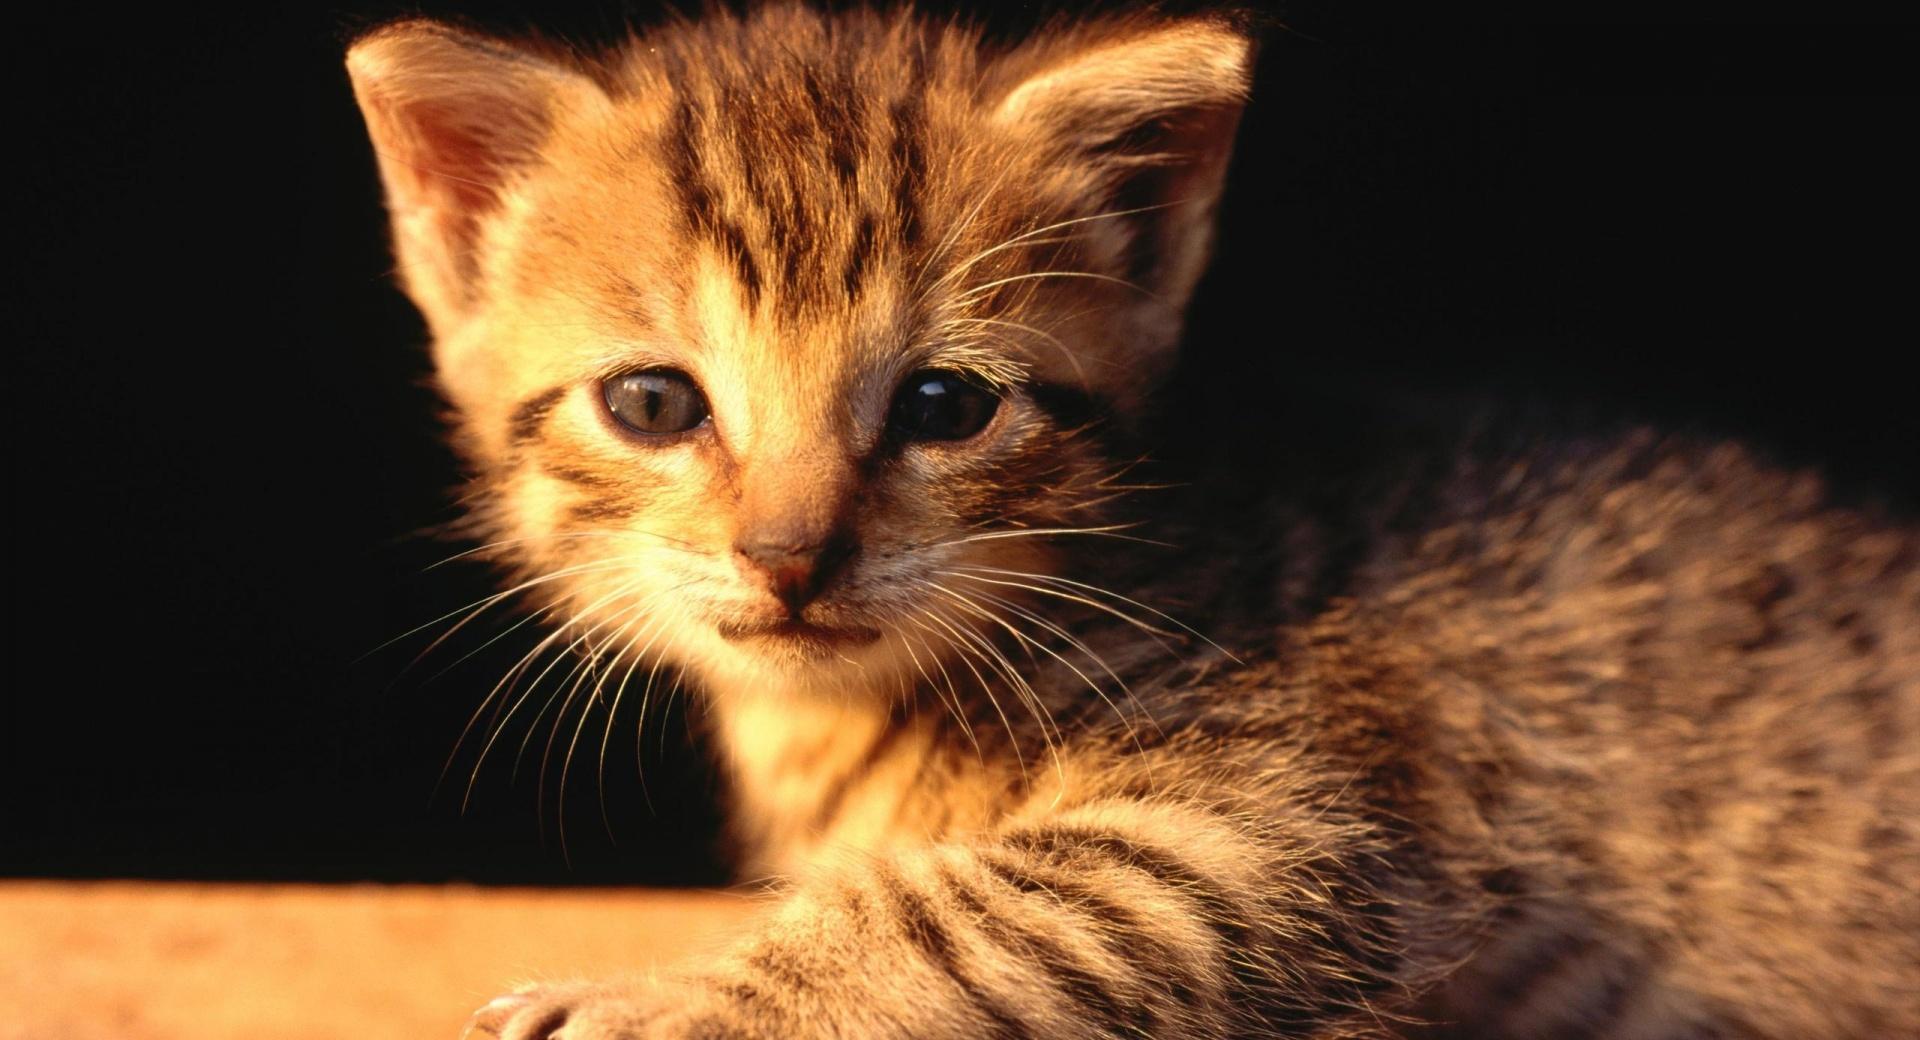 Newborn Tabby Kitten at 1600 x 1200 size wallpapers HD quality